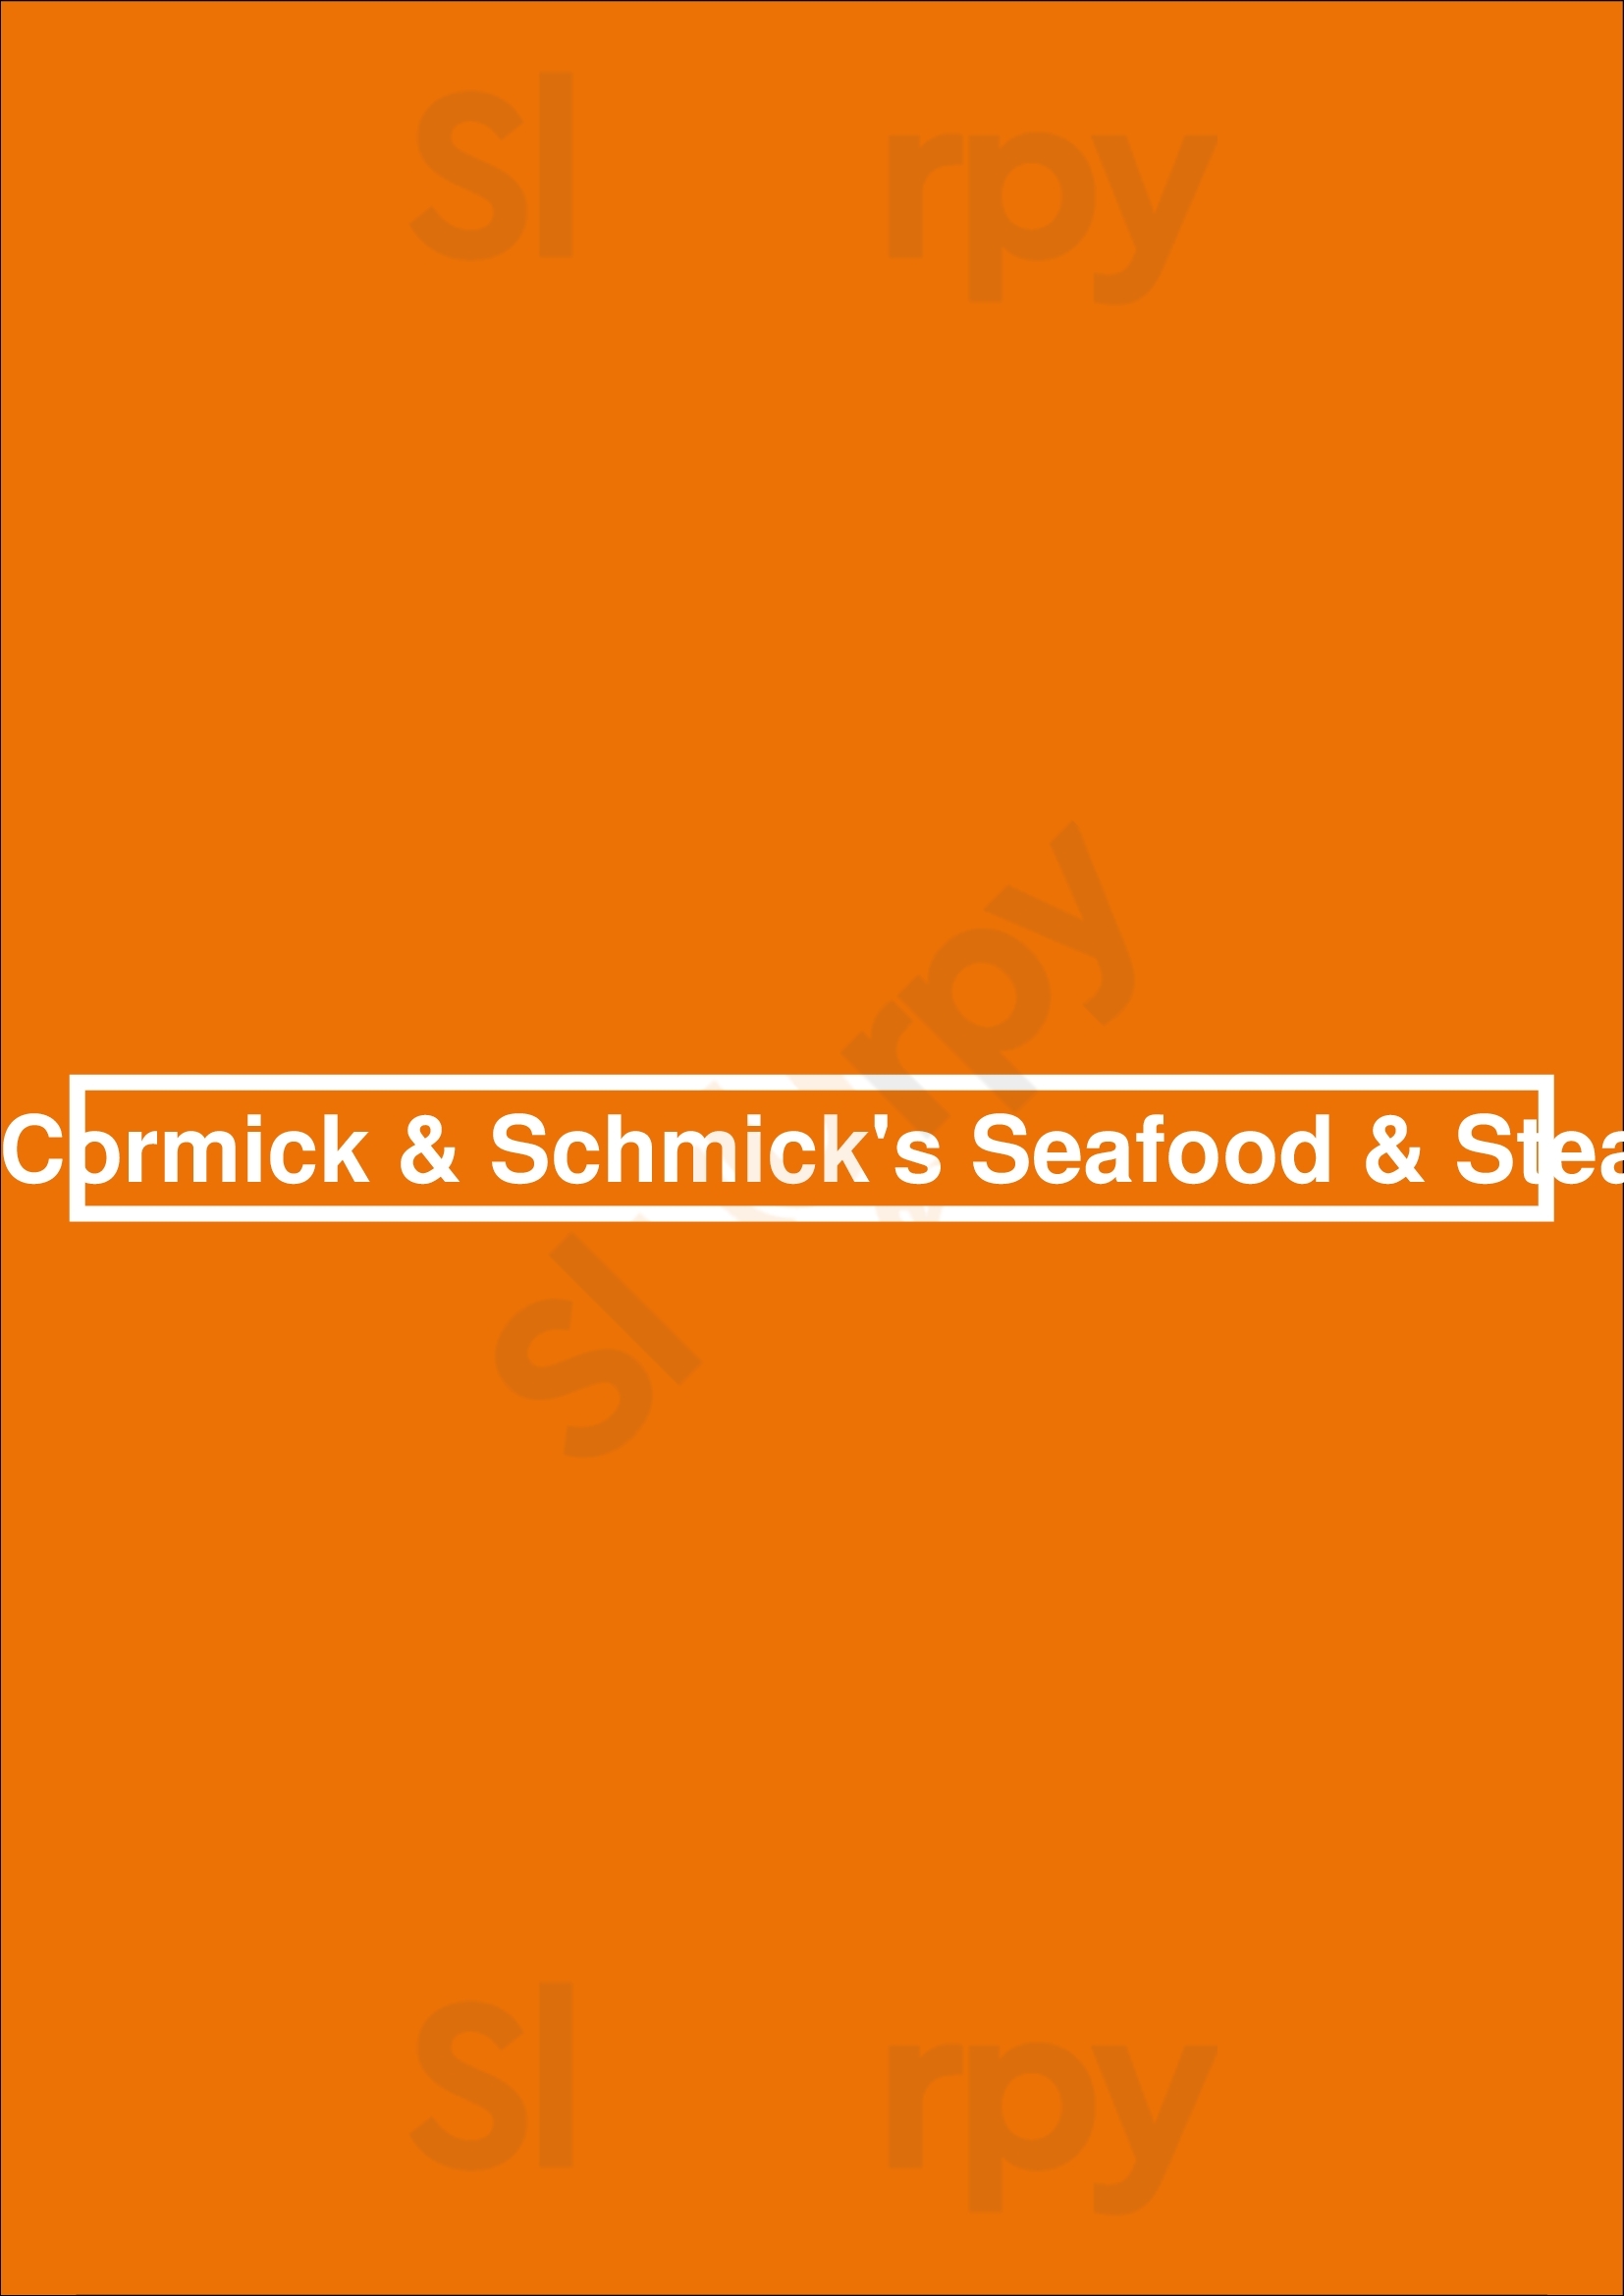 Mccormick & Schmick's Seafood & Steaks Virginia Beach Menu - 1